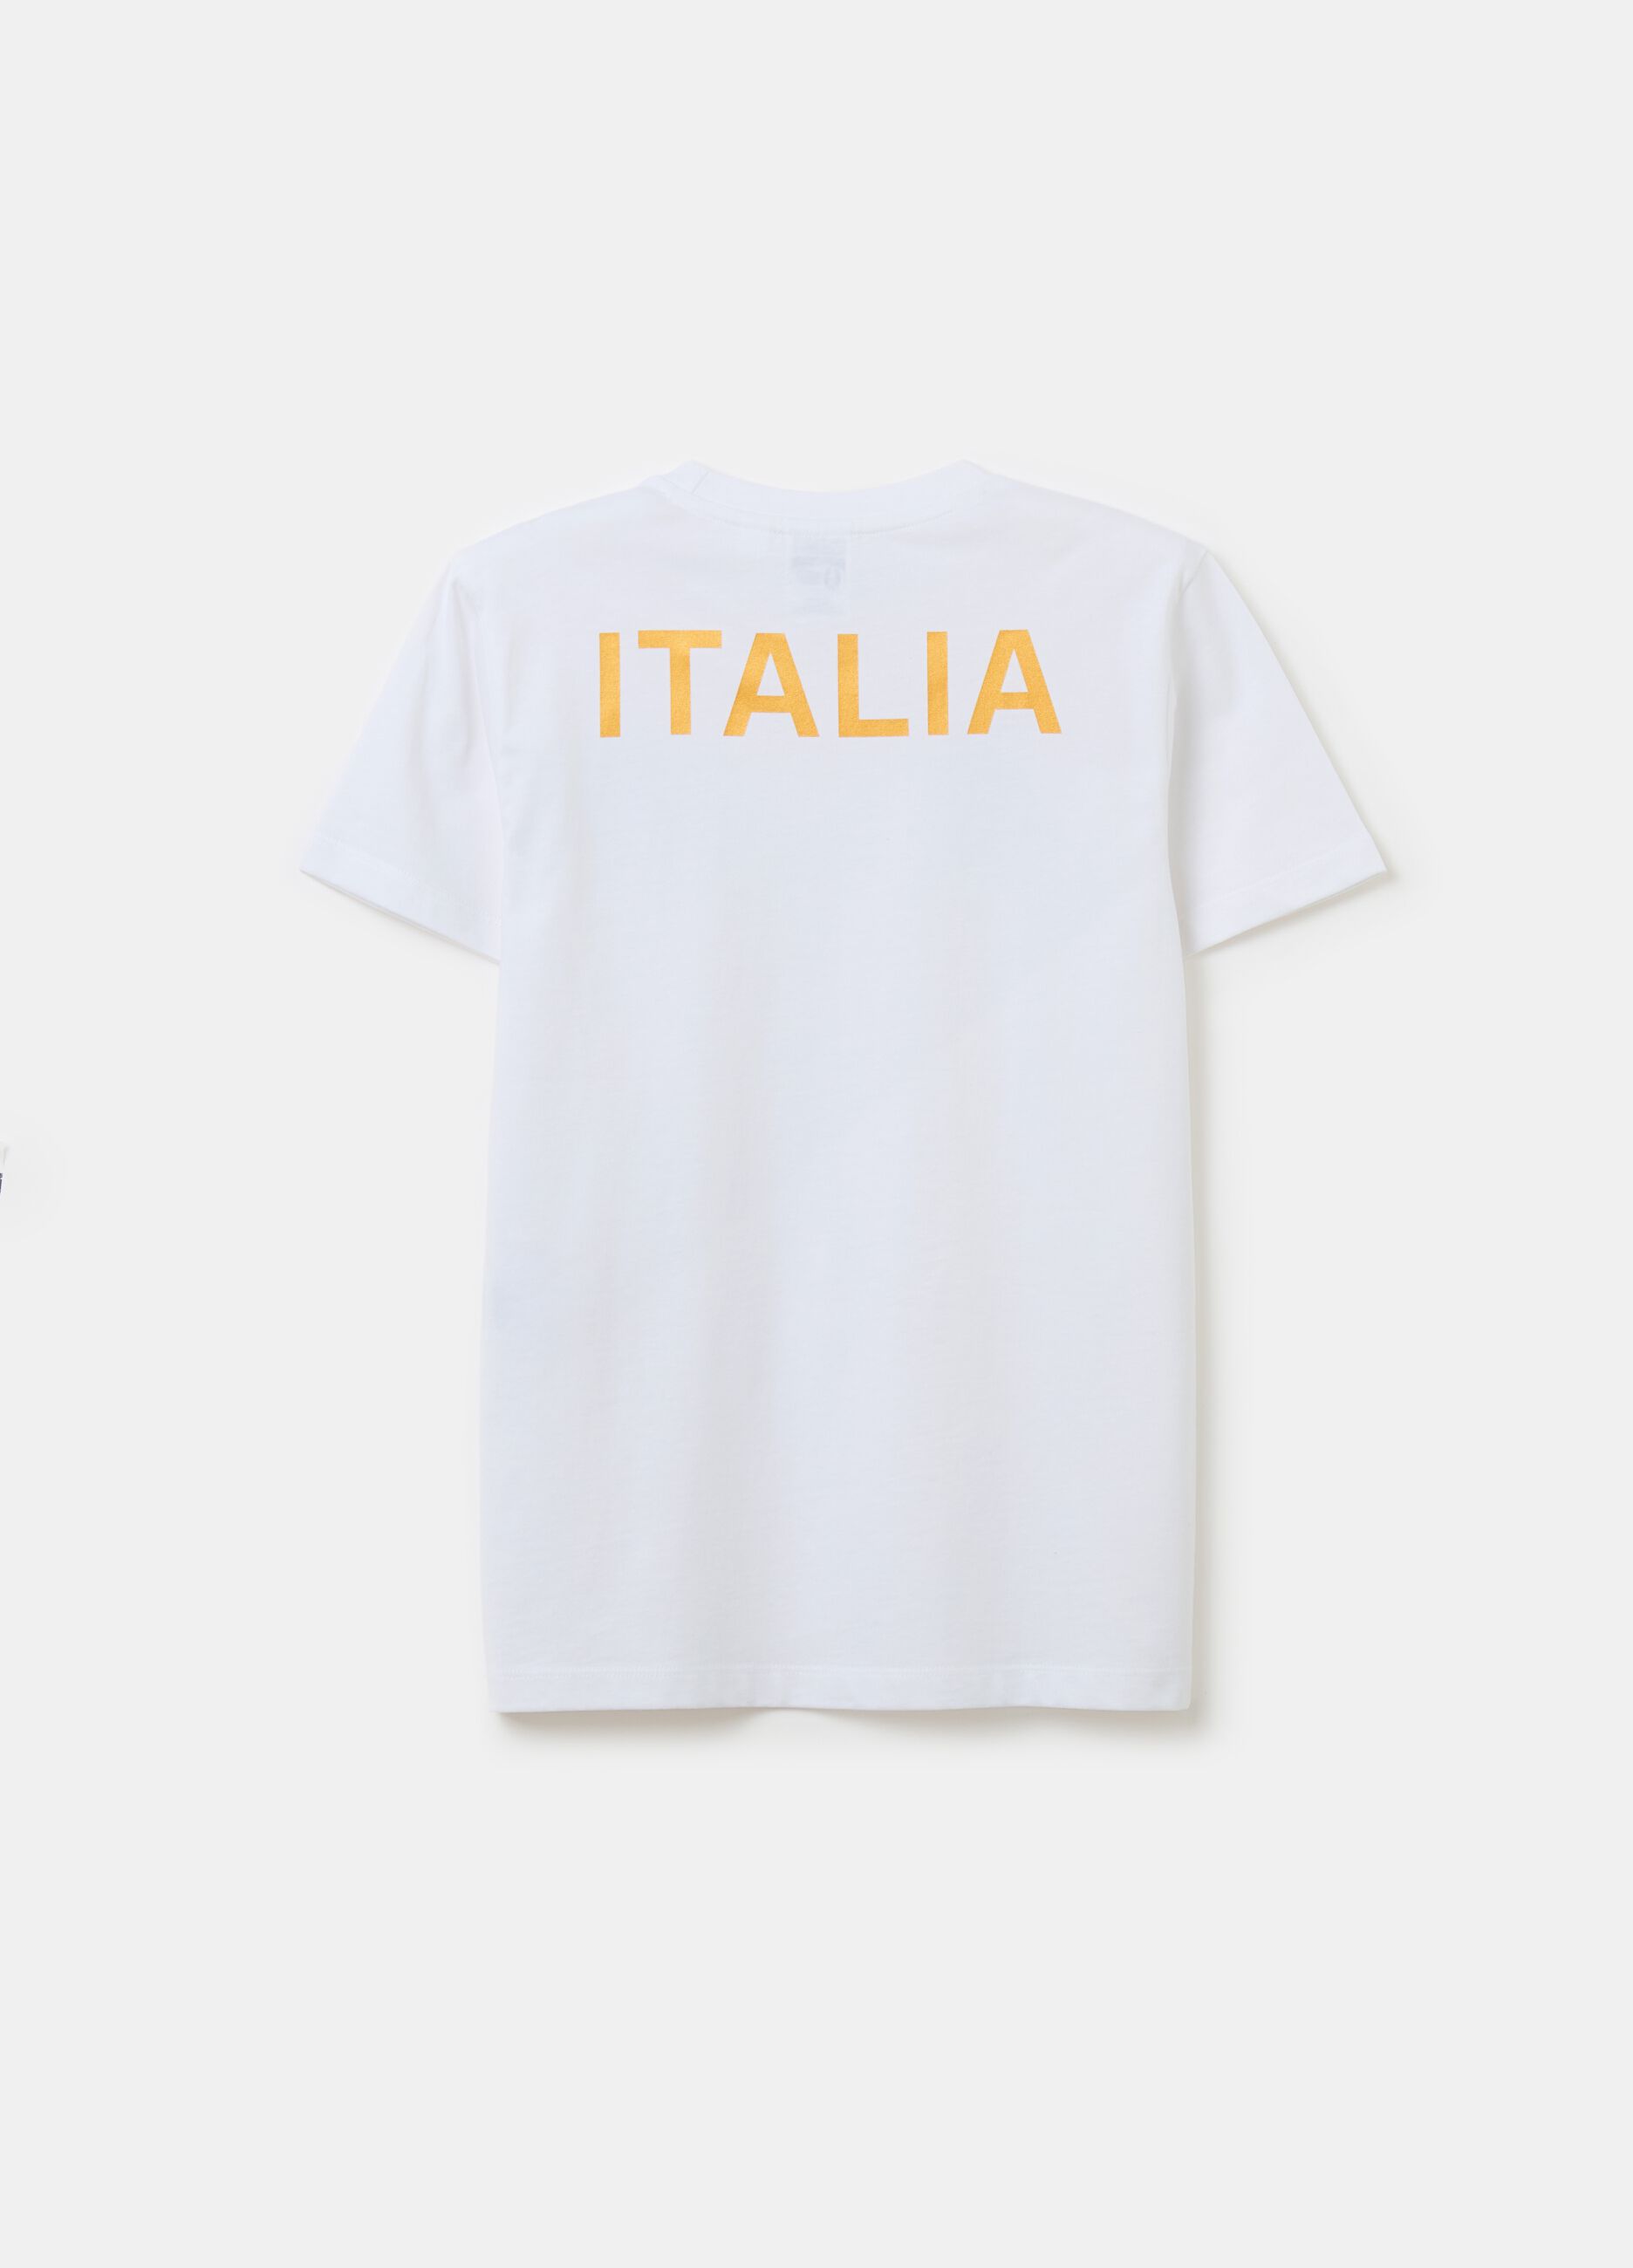 T-shirt stampa UEFA Euro 2024 Italia